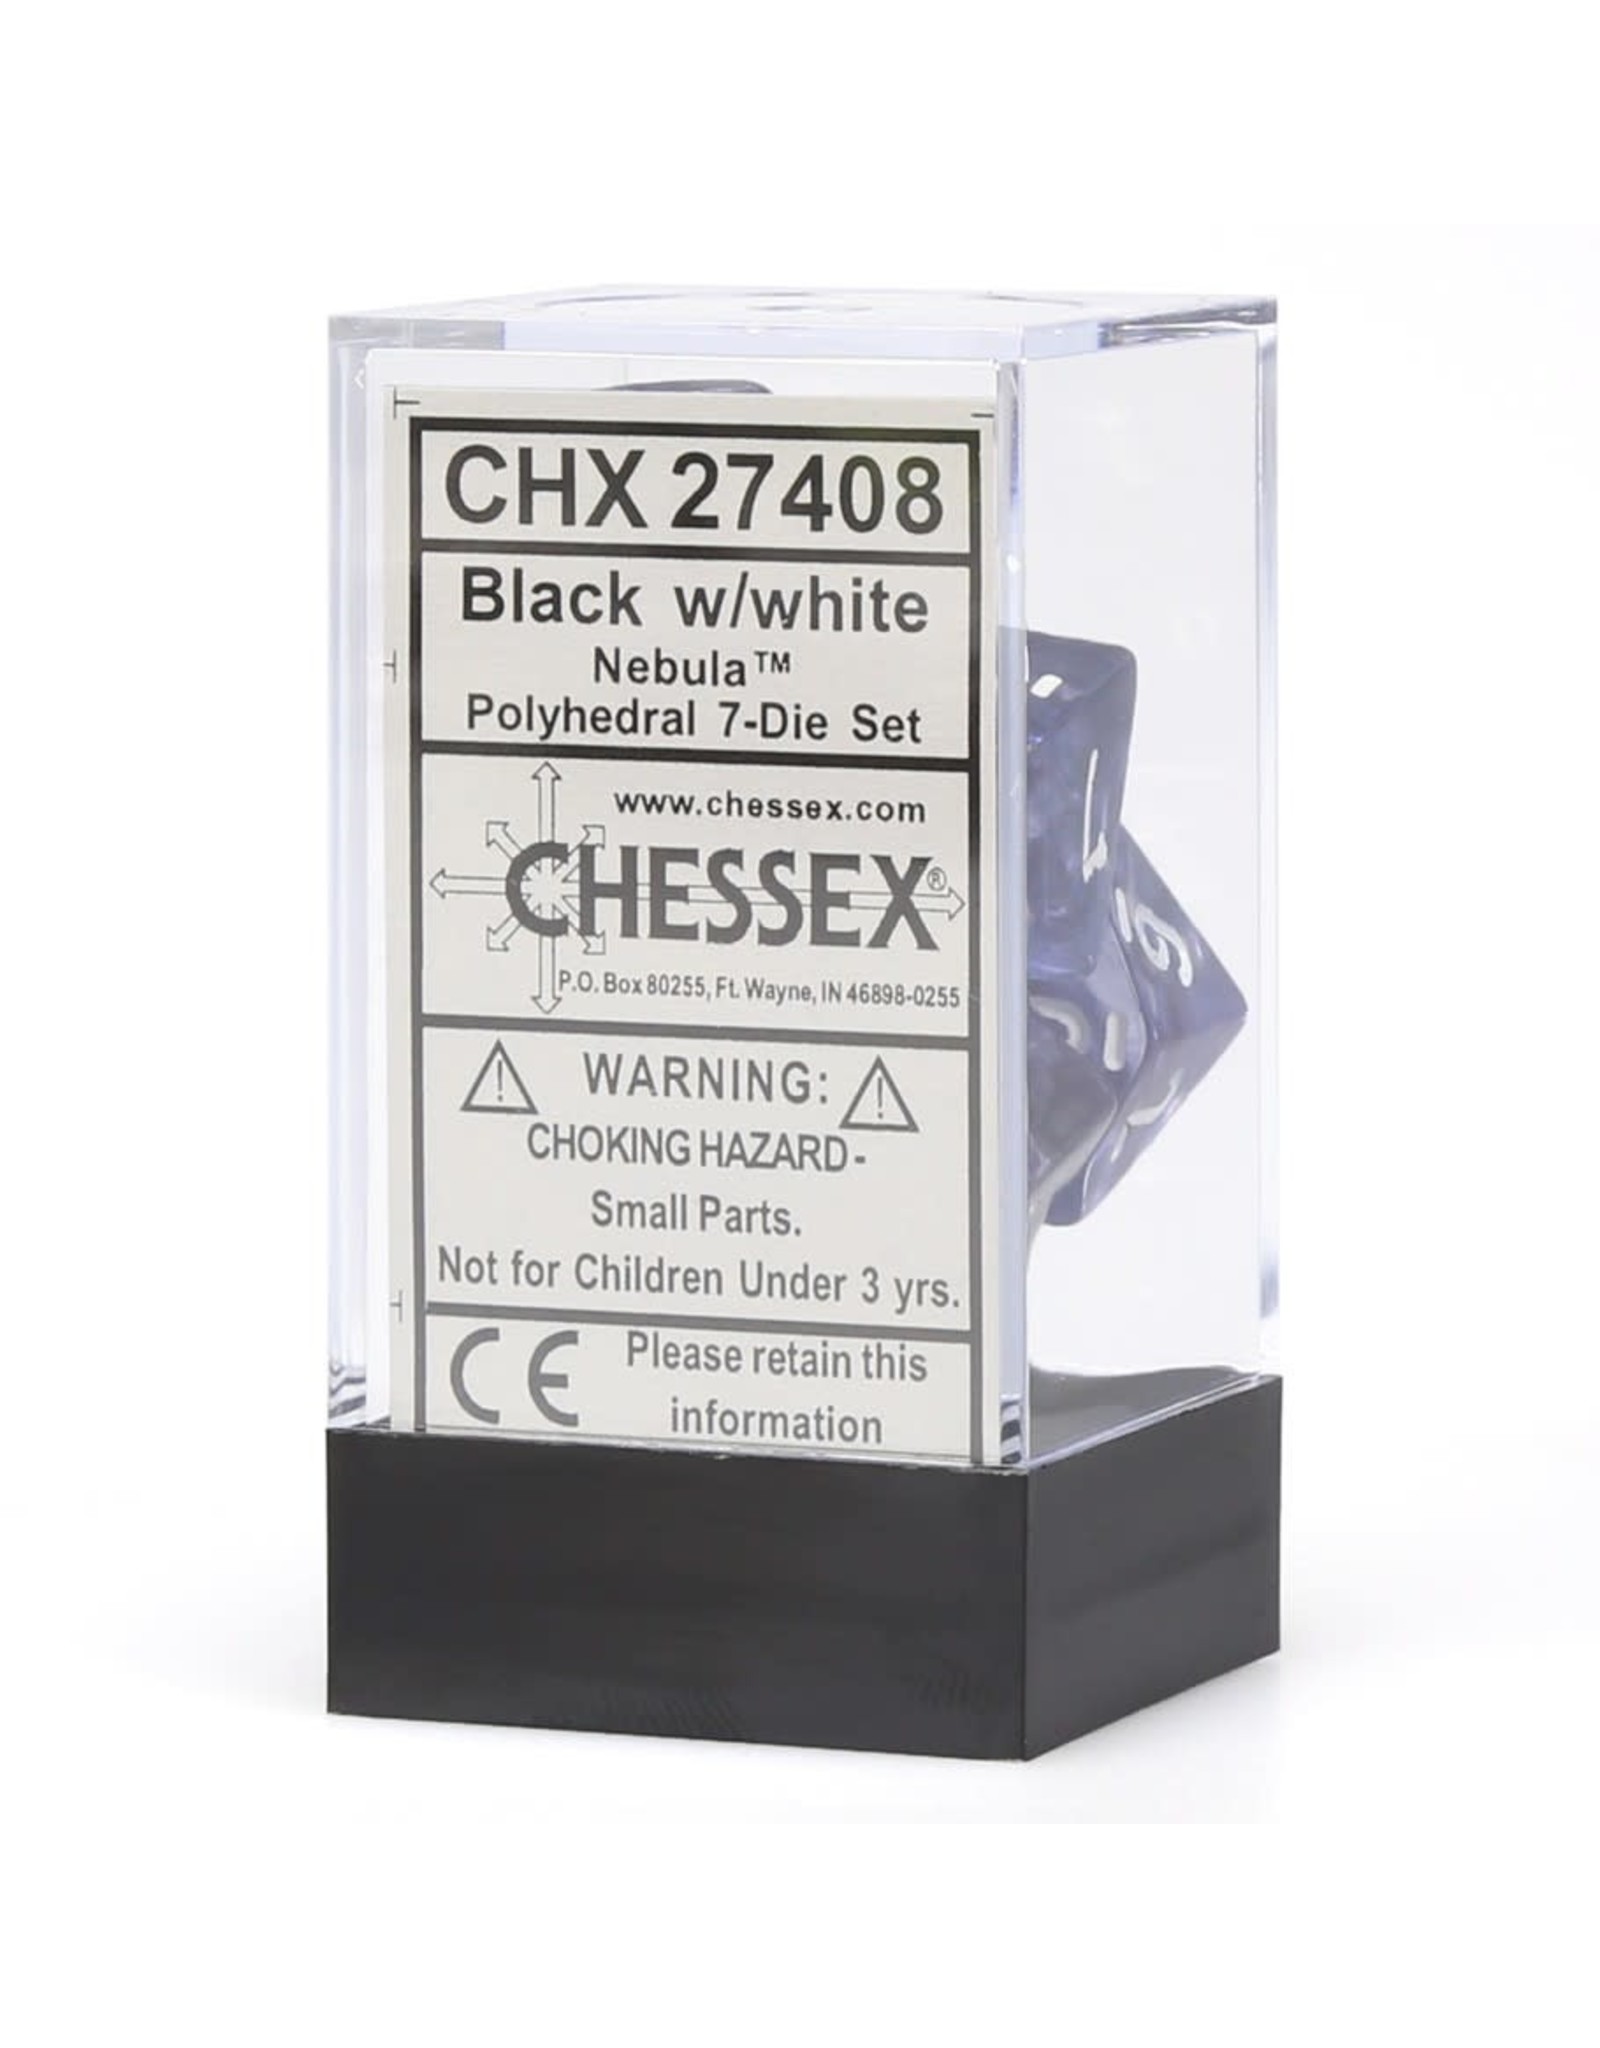 Chessex Polyhedral 7 Dice Set Nebula Black w/White CHX27408